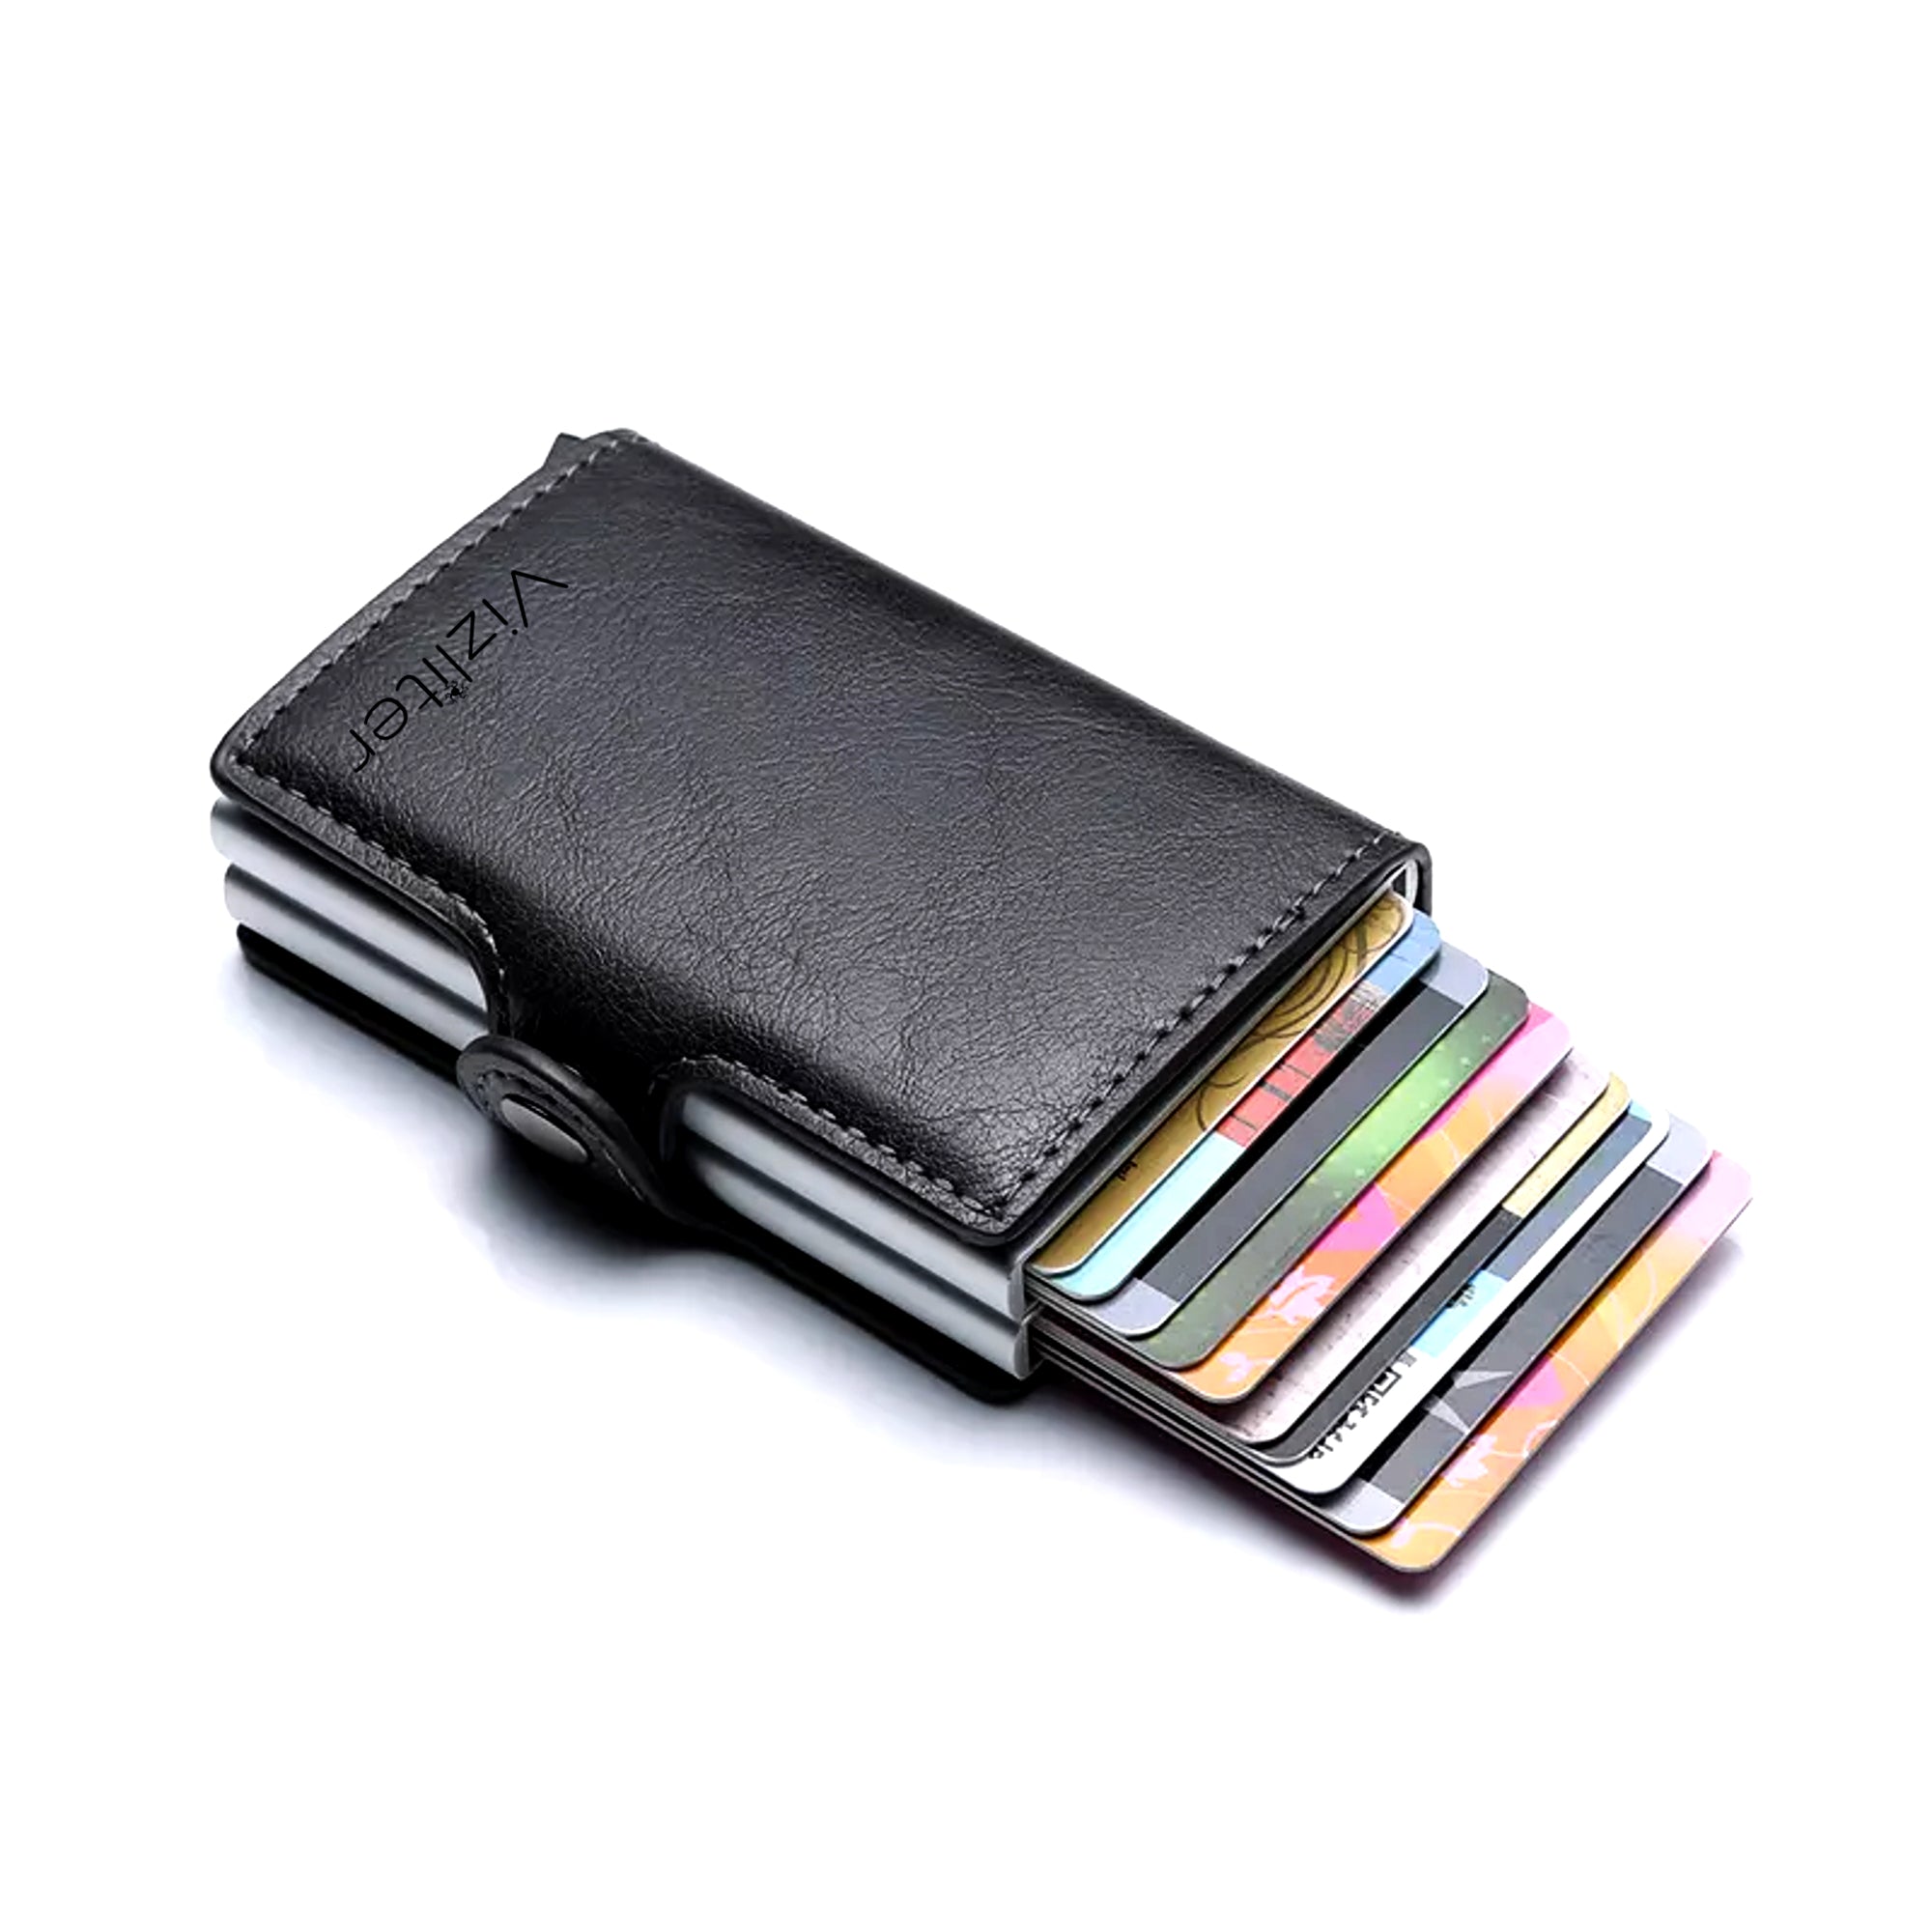 Vizliter Minimalist RFID Blocking Wallet, Slim Wallet, Wallets for Men with 2 Slim Pop-up Card Holder, PU Leather Black